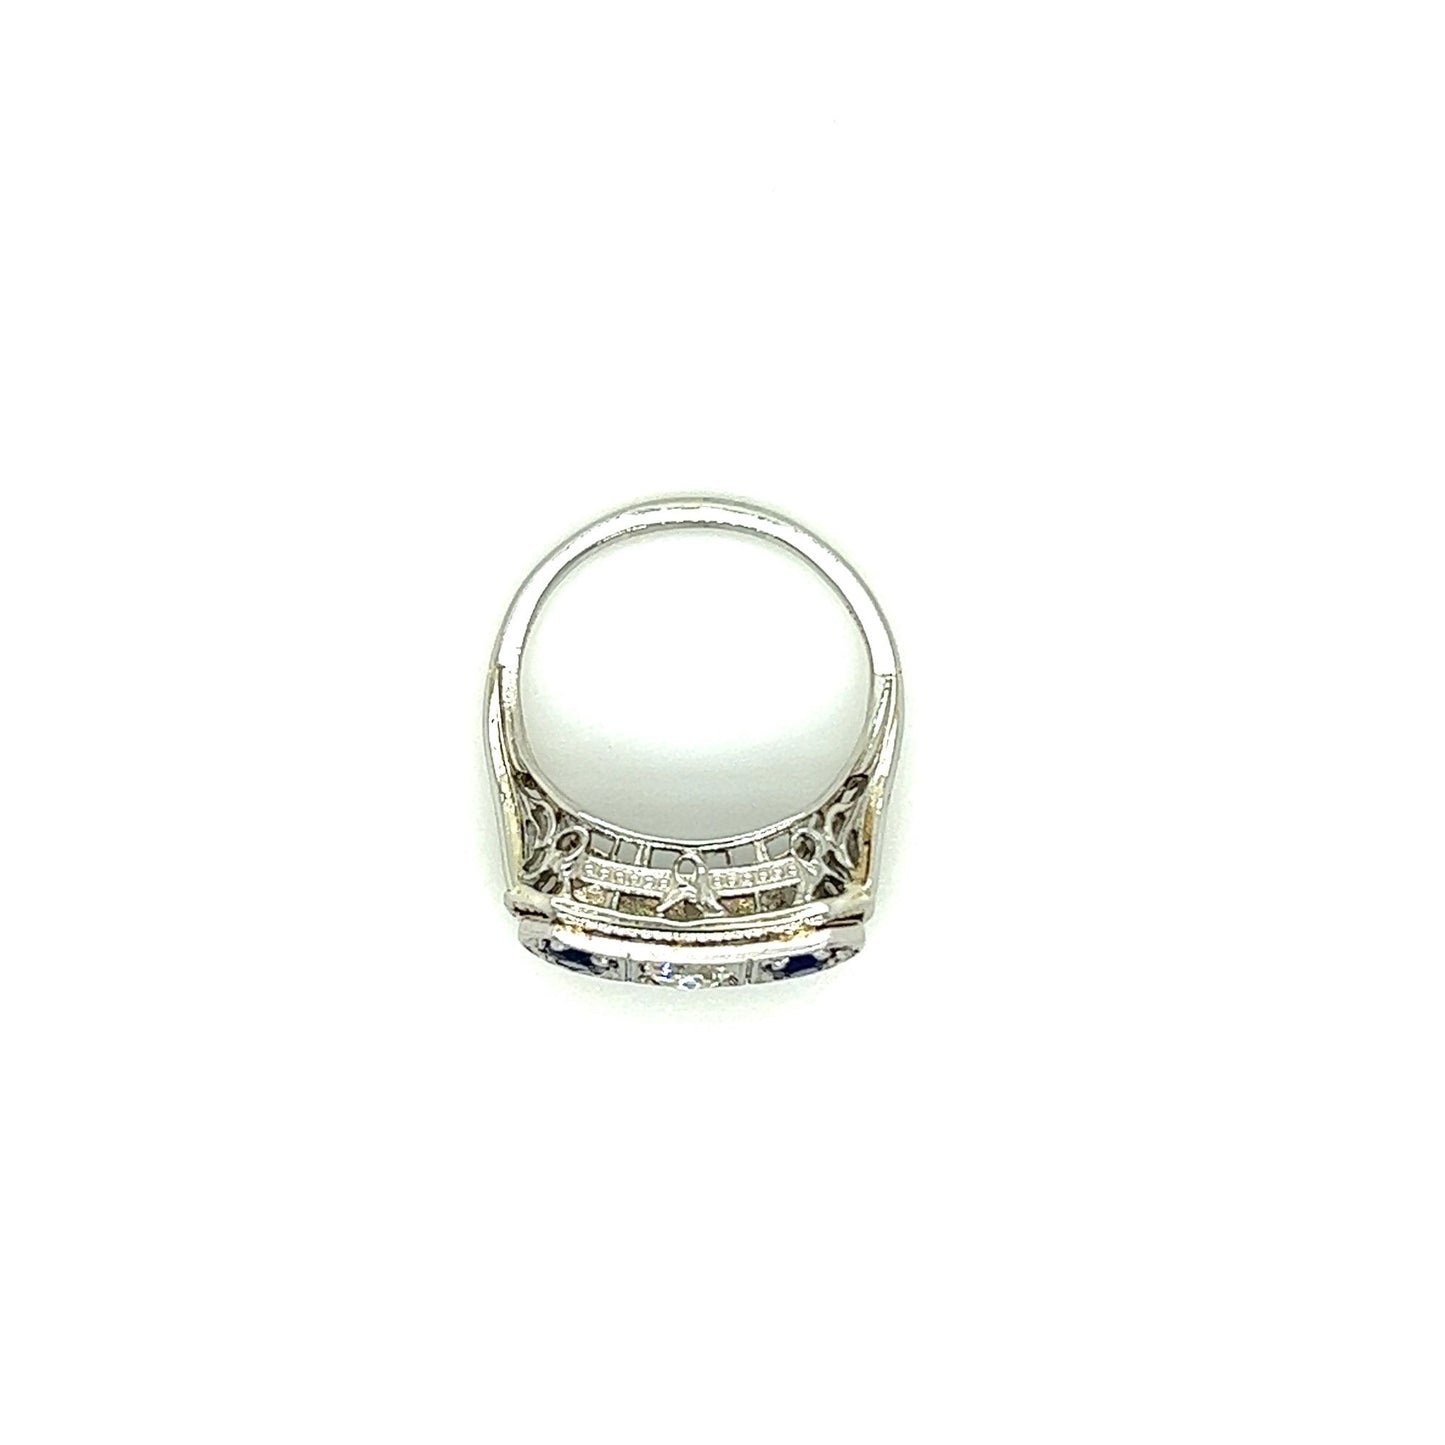 Platinum Three Stone Ring (Diamond and Sapphire)